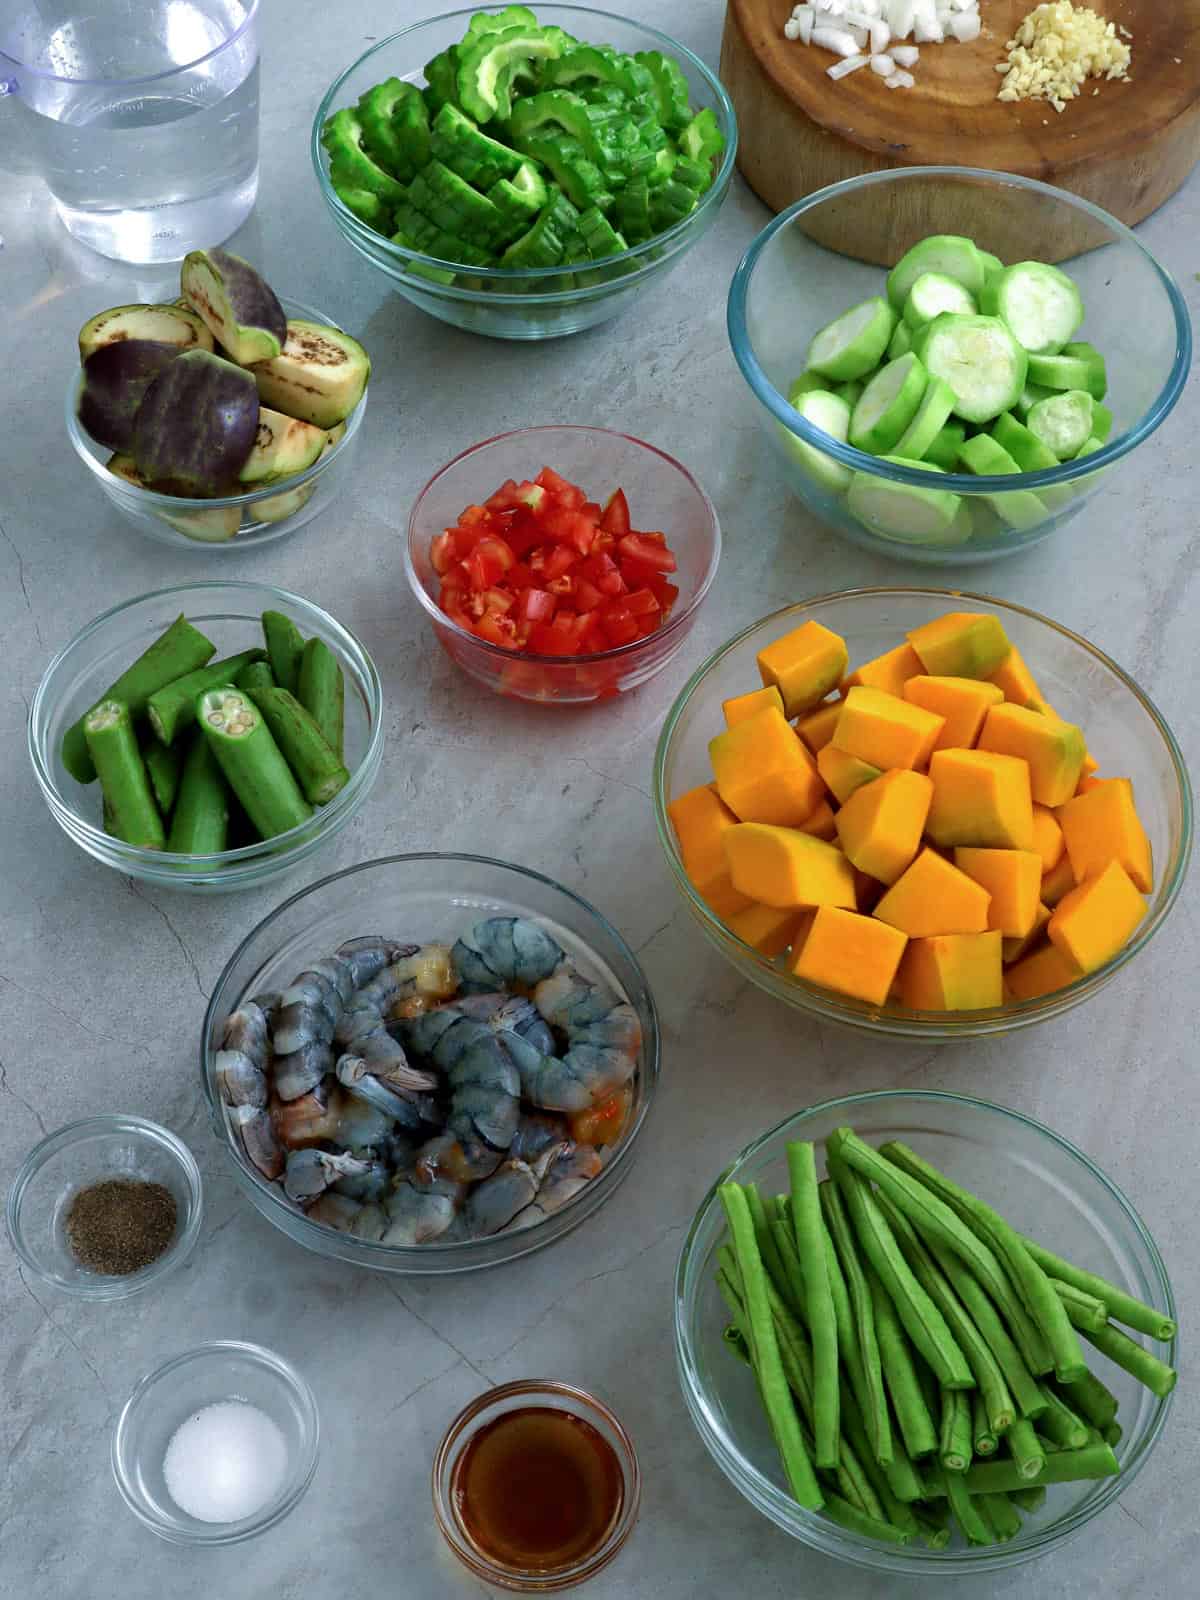 sitaw, shrimp, kalabasa, patola, amapalaya, eggplant, tomatoes, okra, onions, fish sauce in bowls